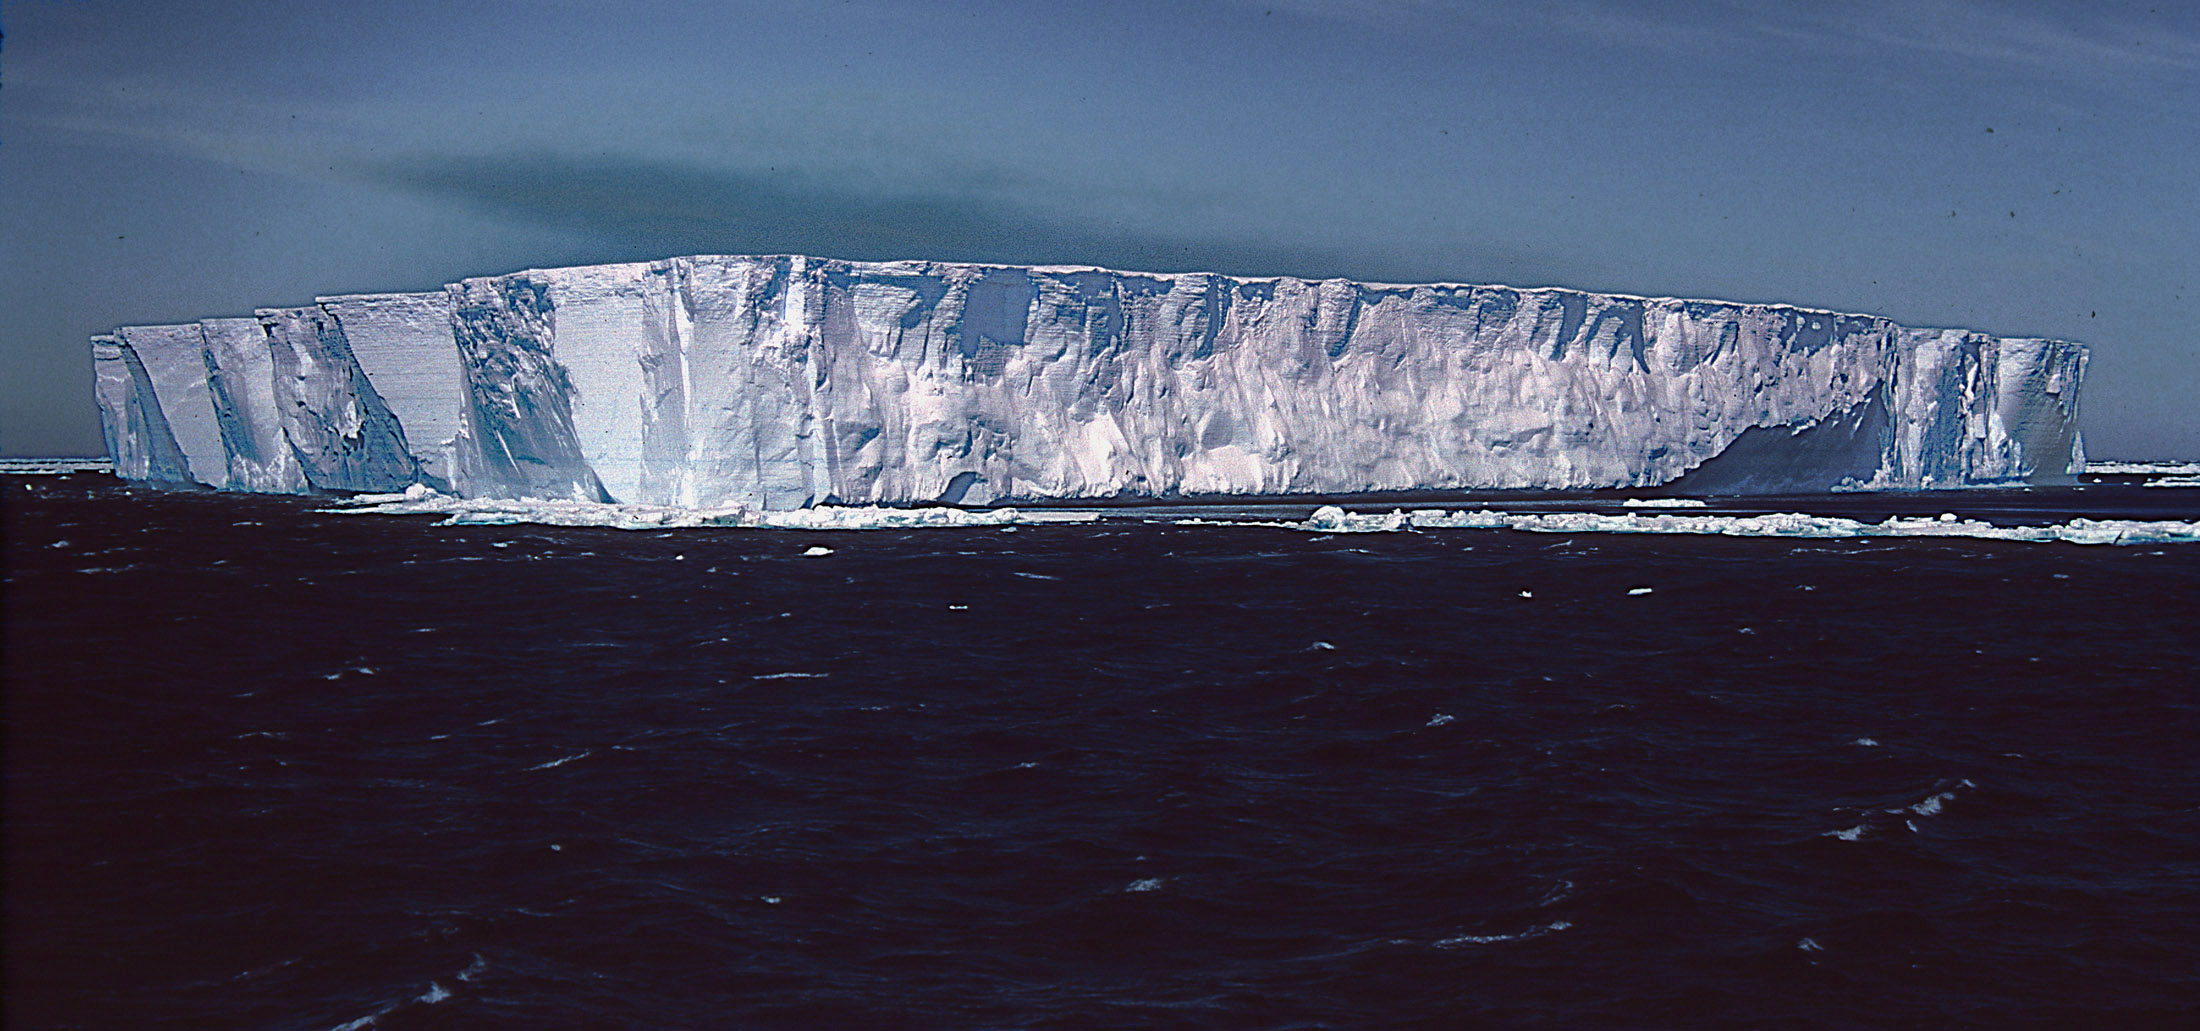 Large flat-top Iceberg